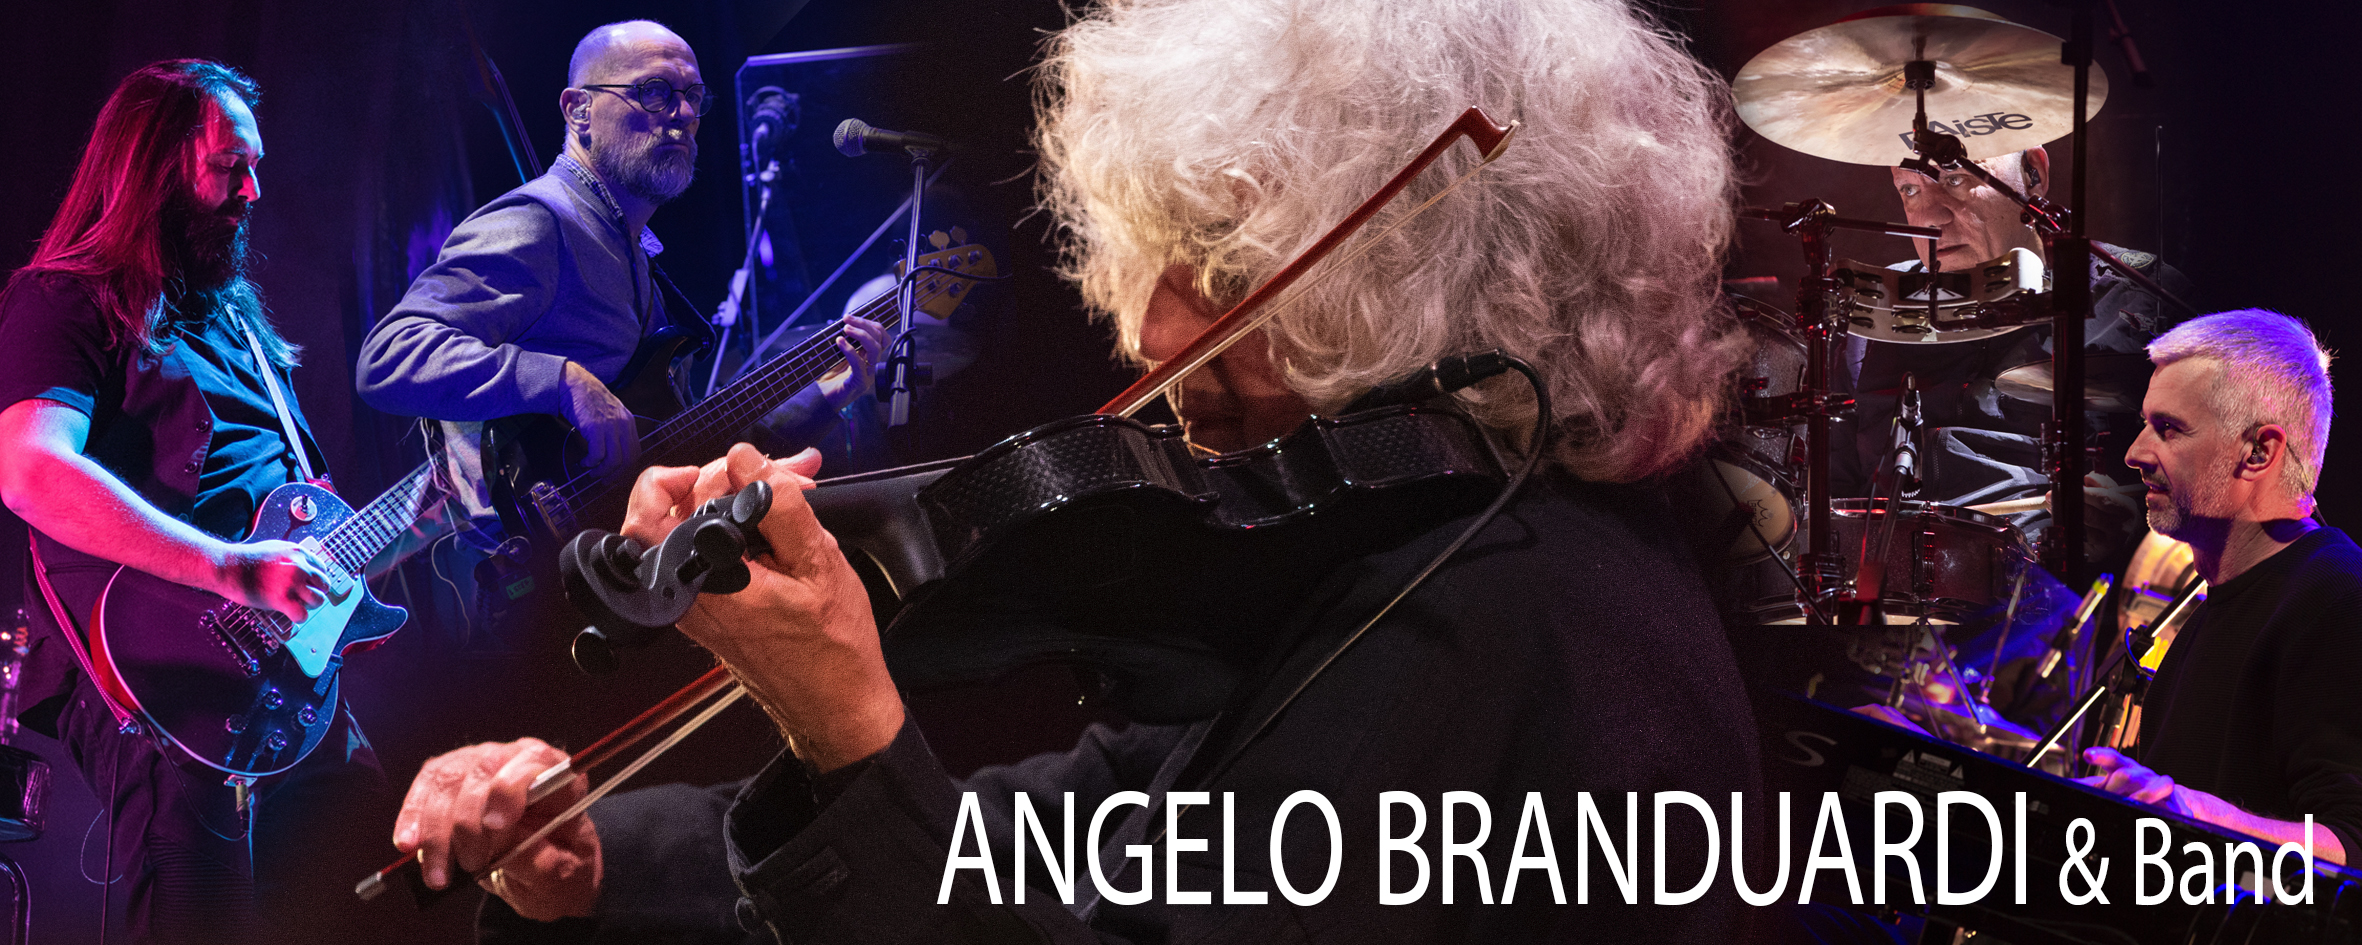 Angelo Branduardi & Band